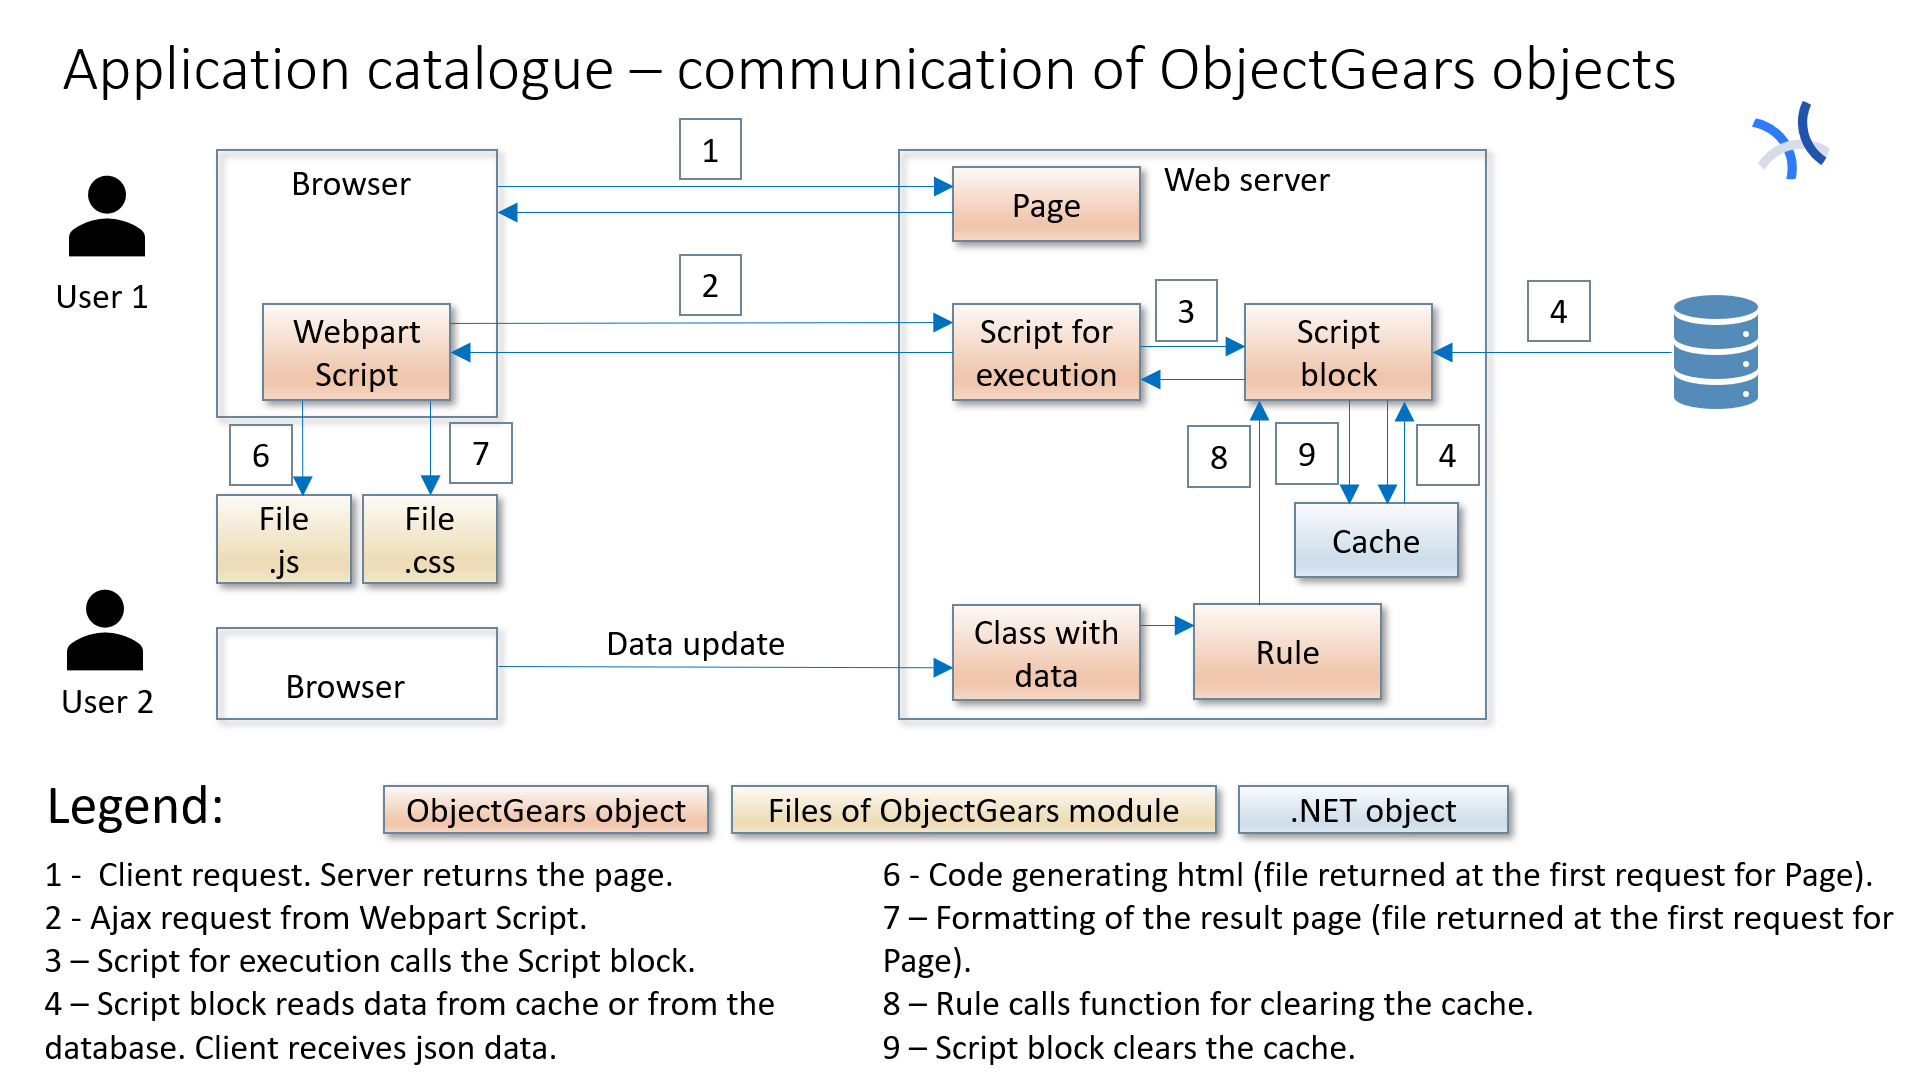 Application catalogue and CMDB – communication of ObjectGears objects